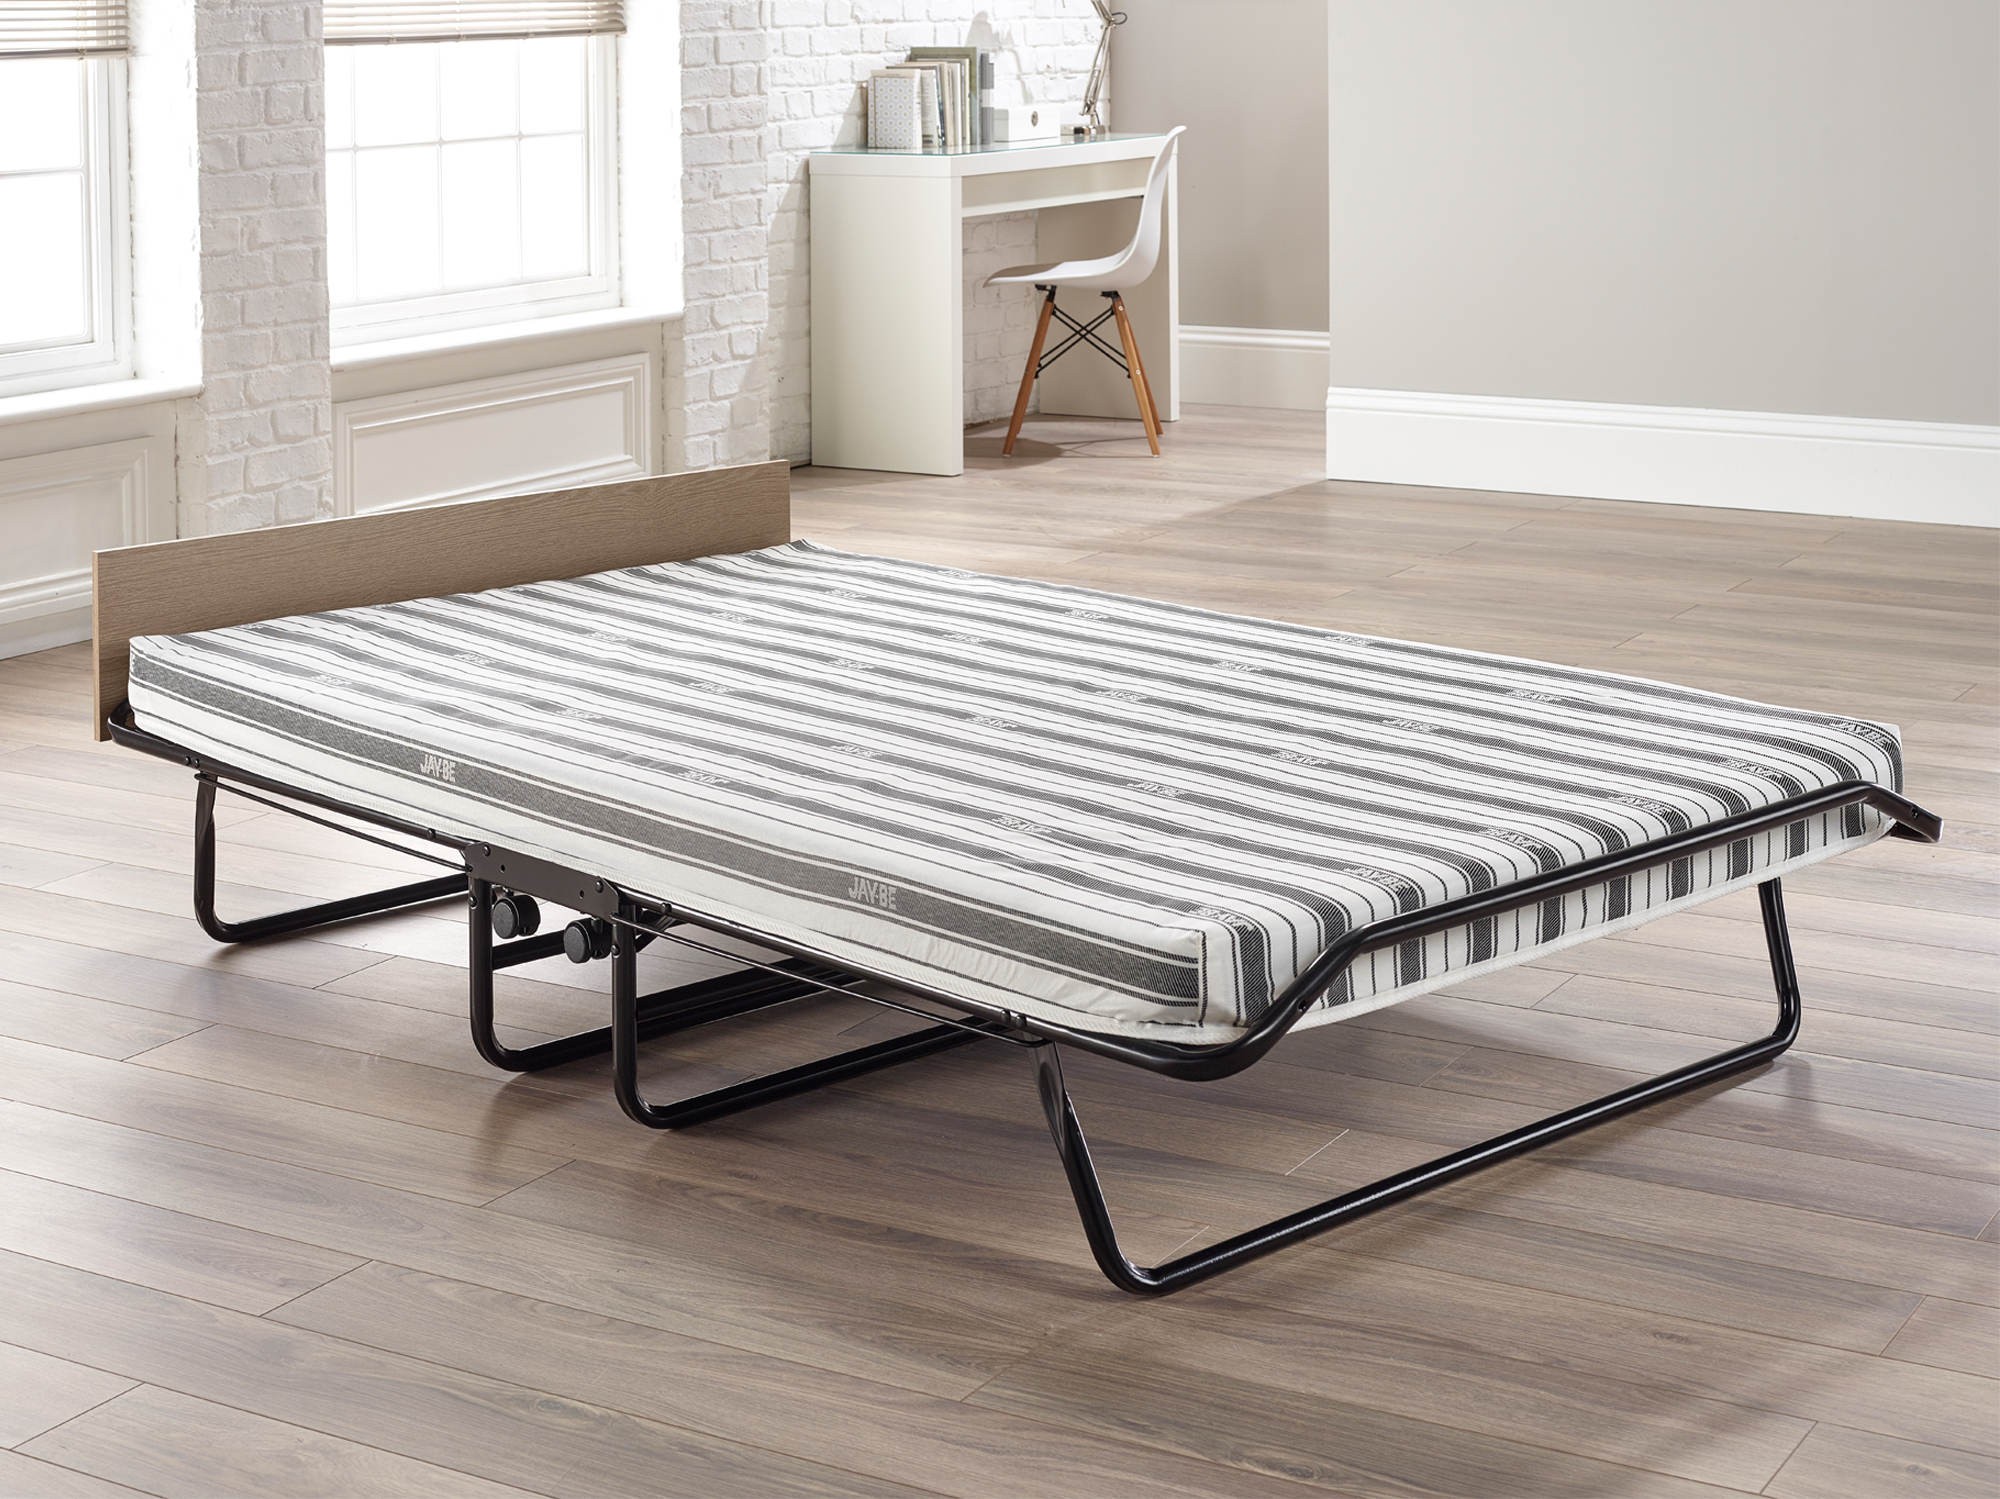 48 inch double folding mattress